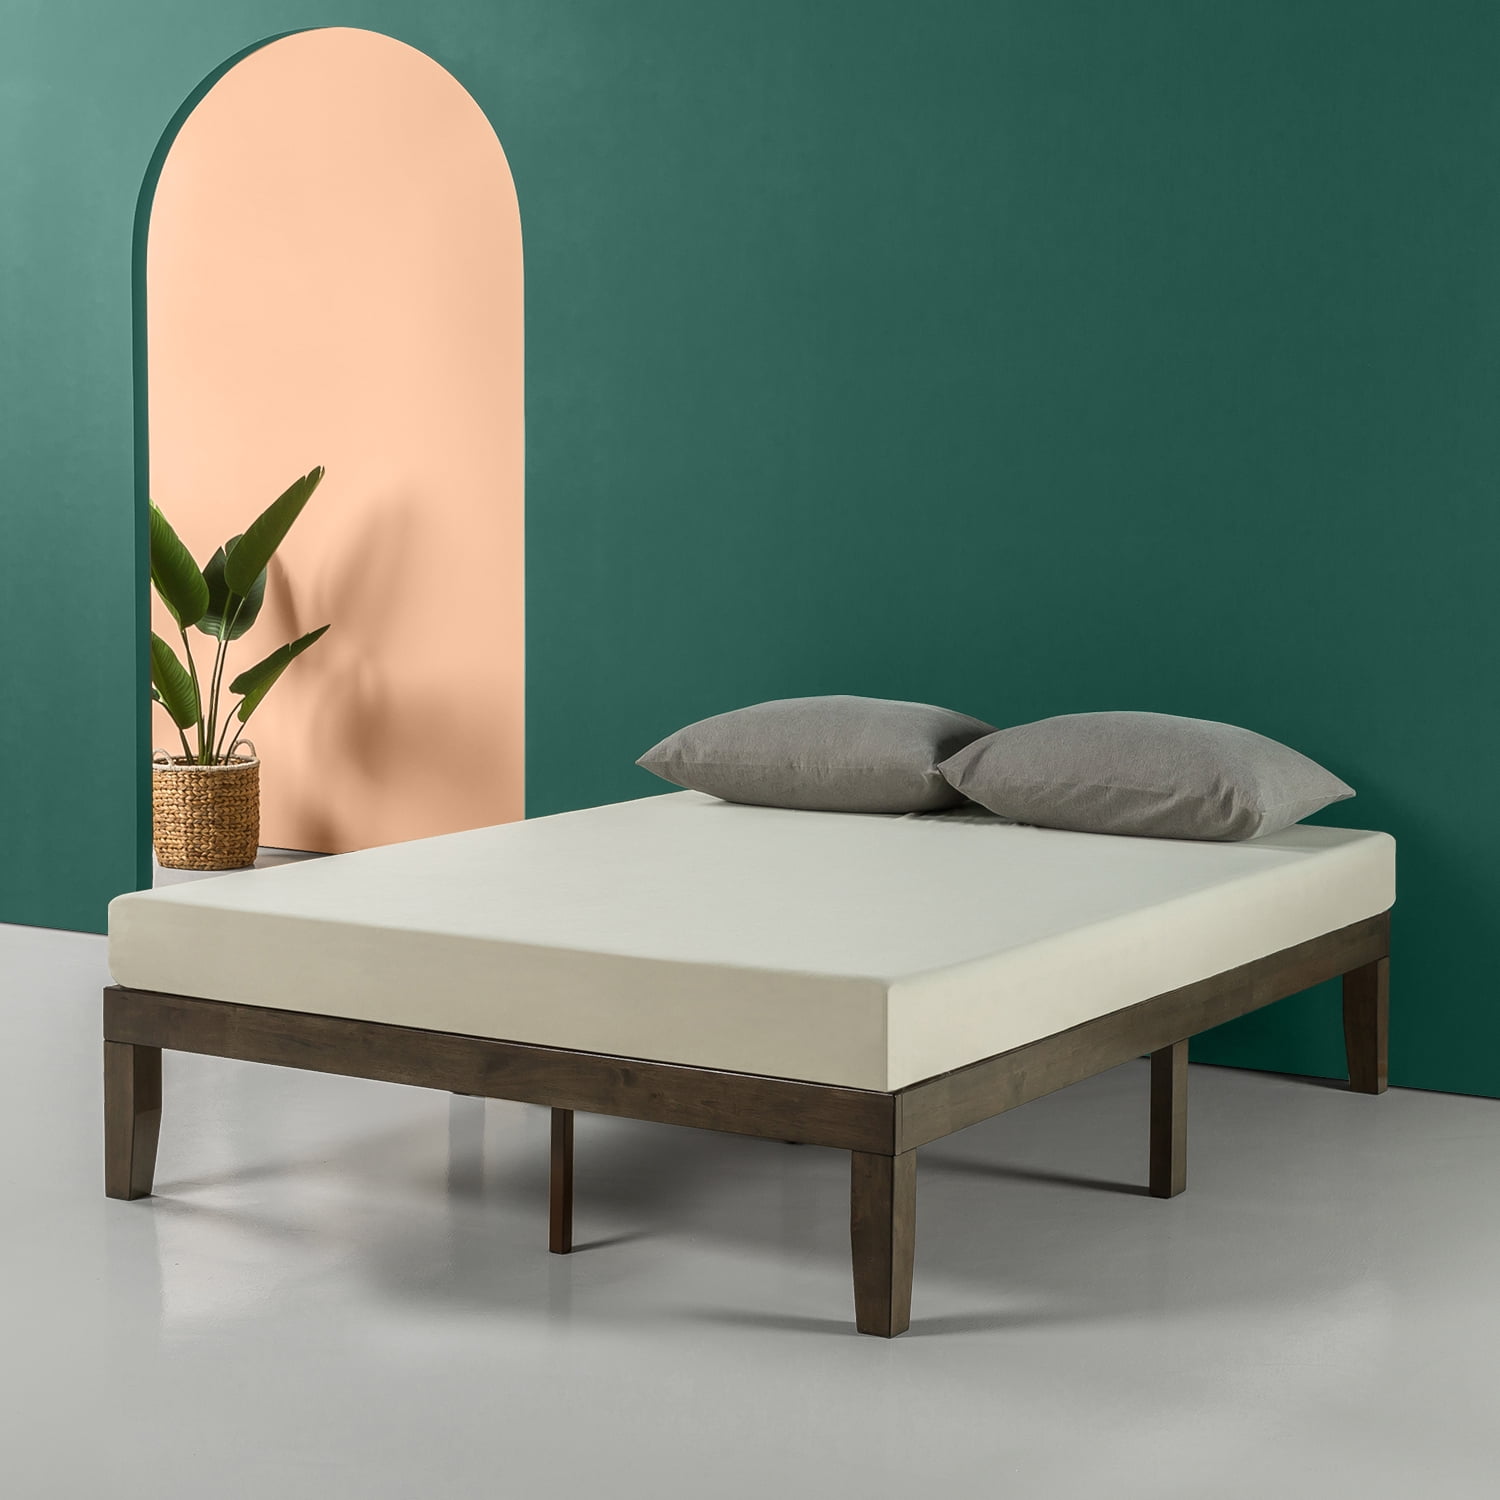 Zinus Moiz 14 Wood Platform Bed Full, Priage Antique Espresso Solid Wood Platform Bed With Headboard